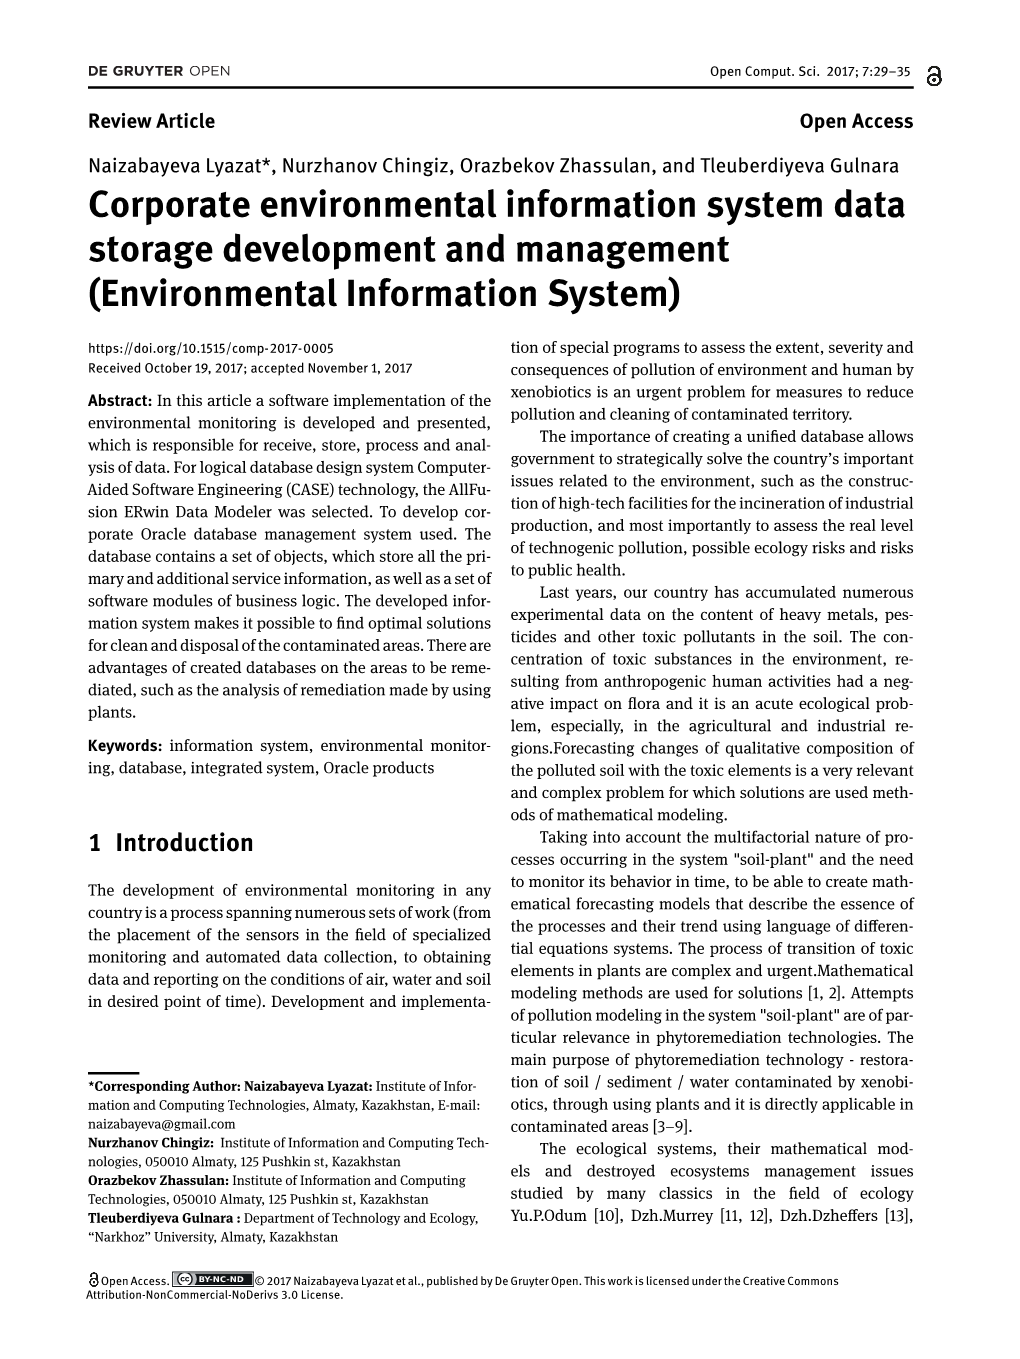 Corporate Environmental Information System Data Storage Development